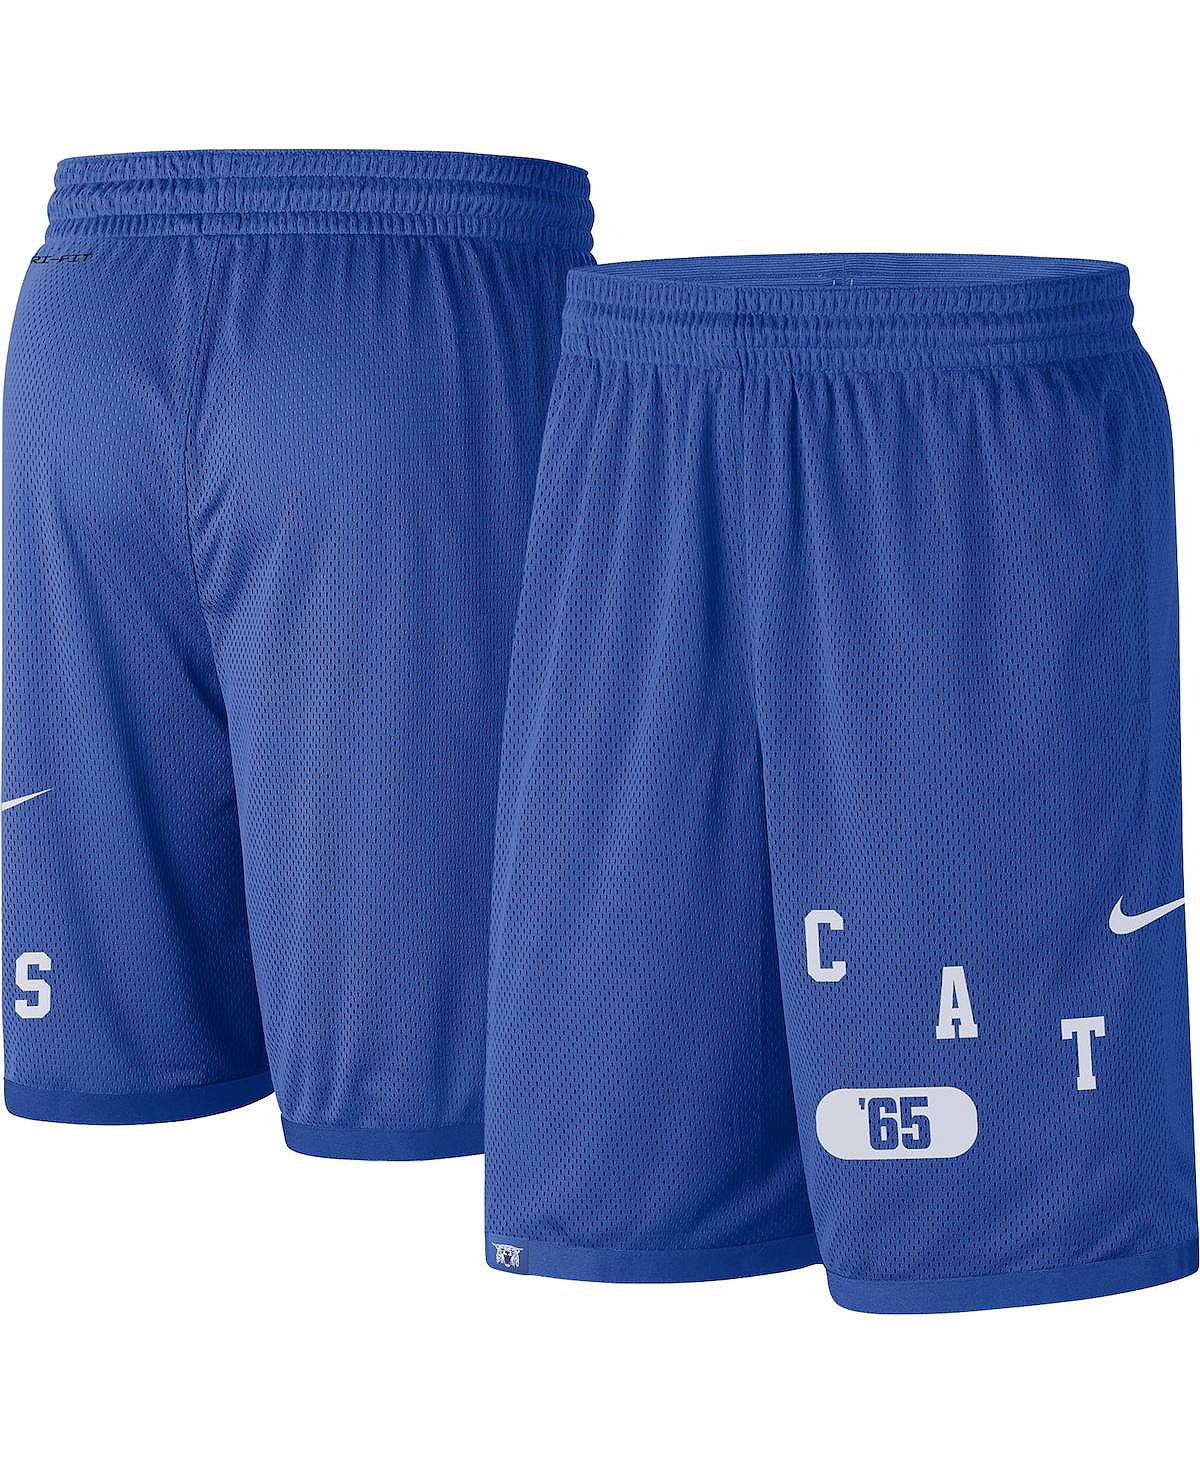 Мужские шорты Royal Kentucky Wildcats с надписью Performance Nike